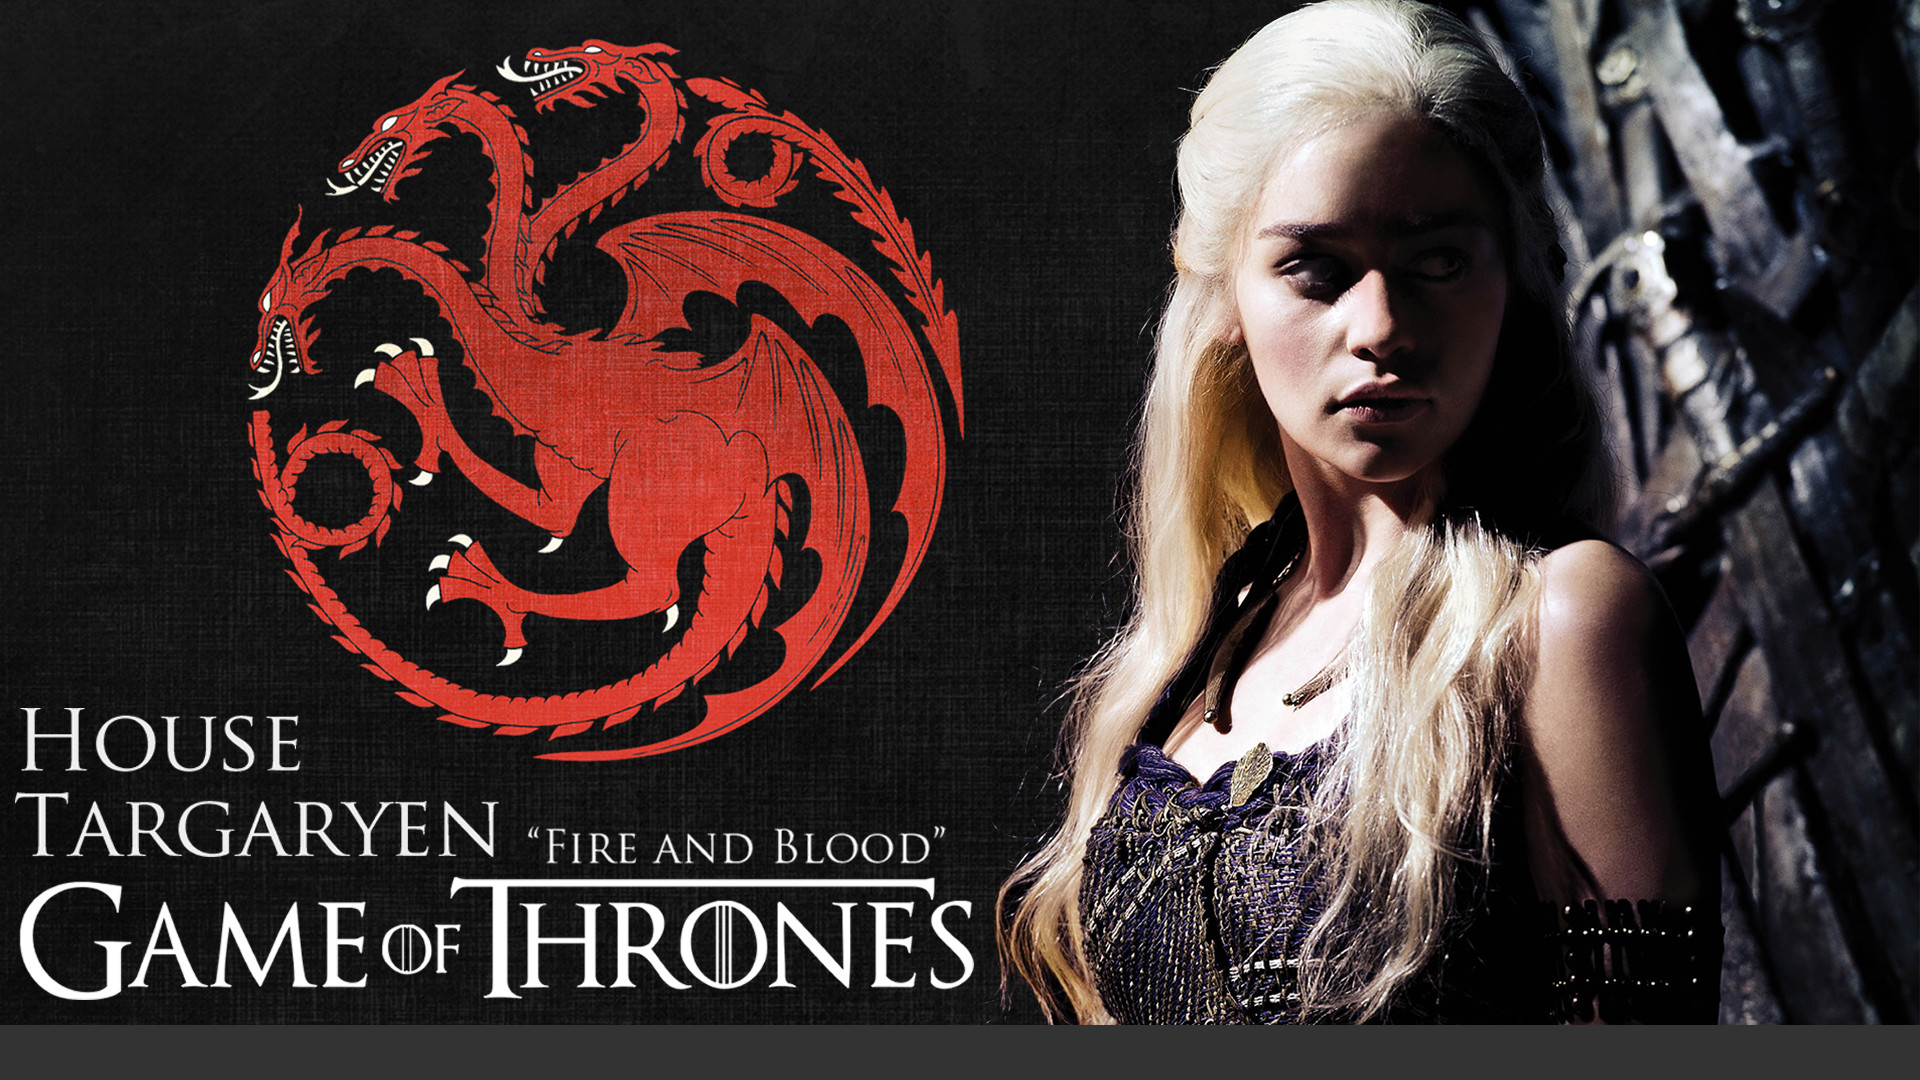 … Game of Thrones: House Targaryen Wallpaper (HD) by davef30